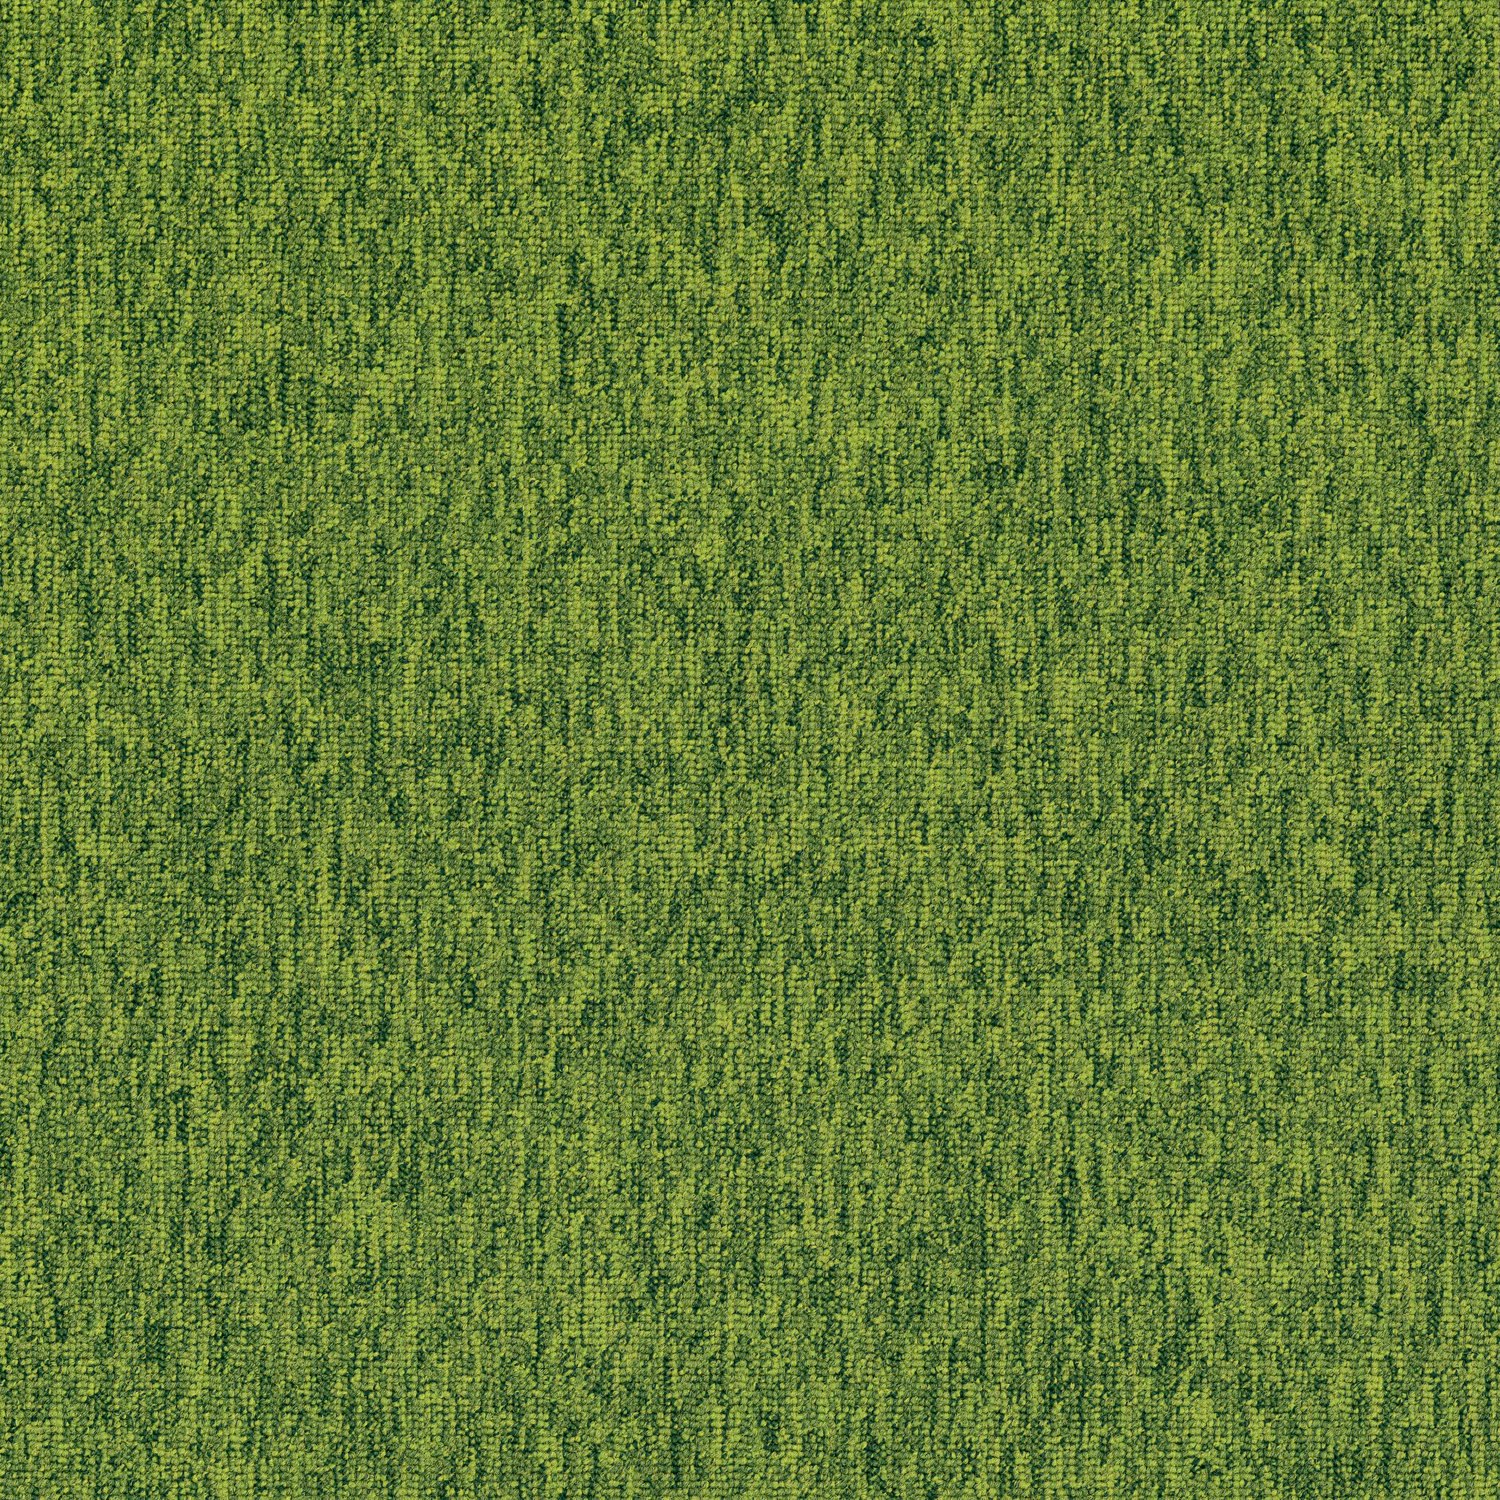 текстура травы из гта 5 фото 52